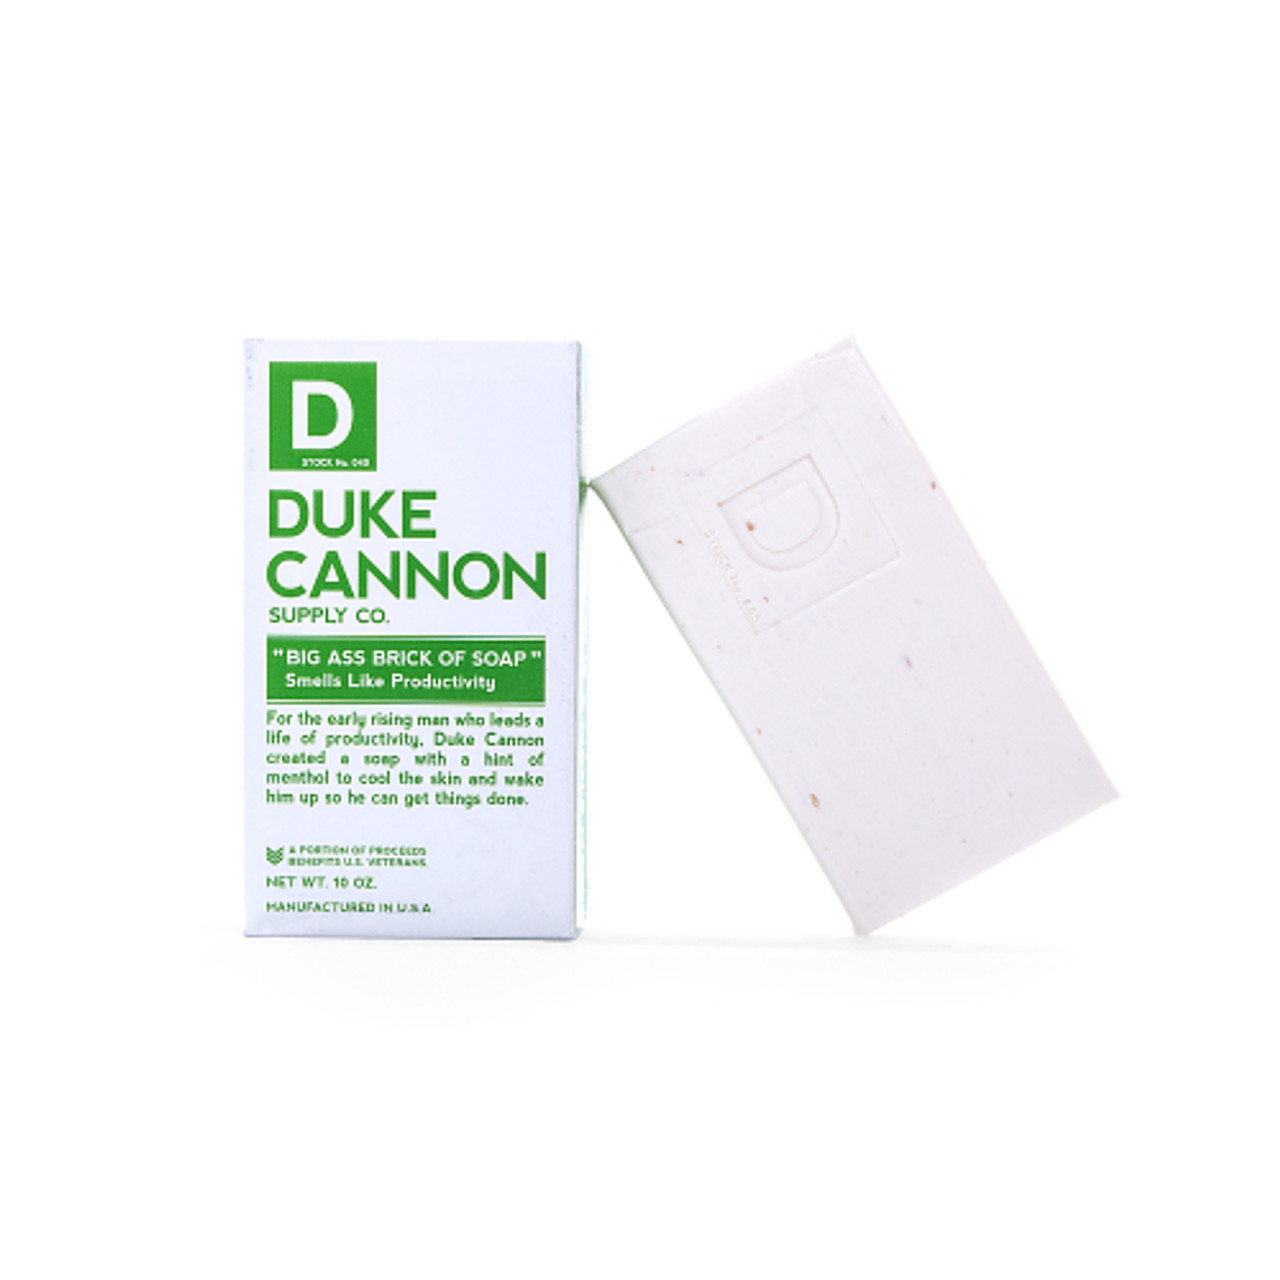 Duke Cannon Big Ass Brick of Soap - Smells Like Productivity - n/a